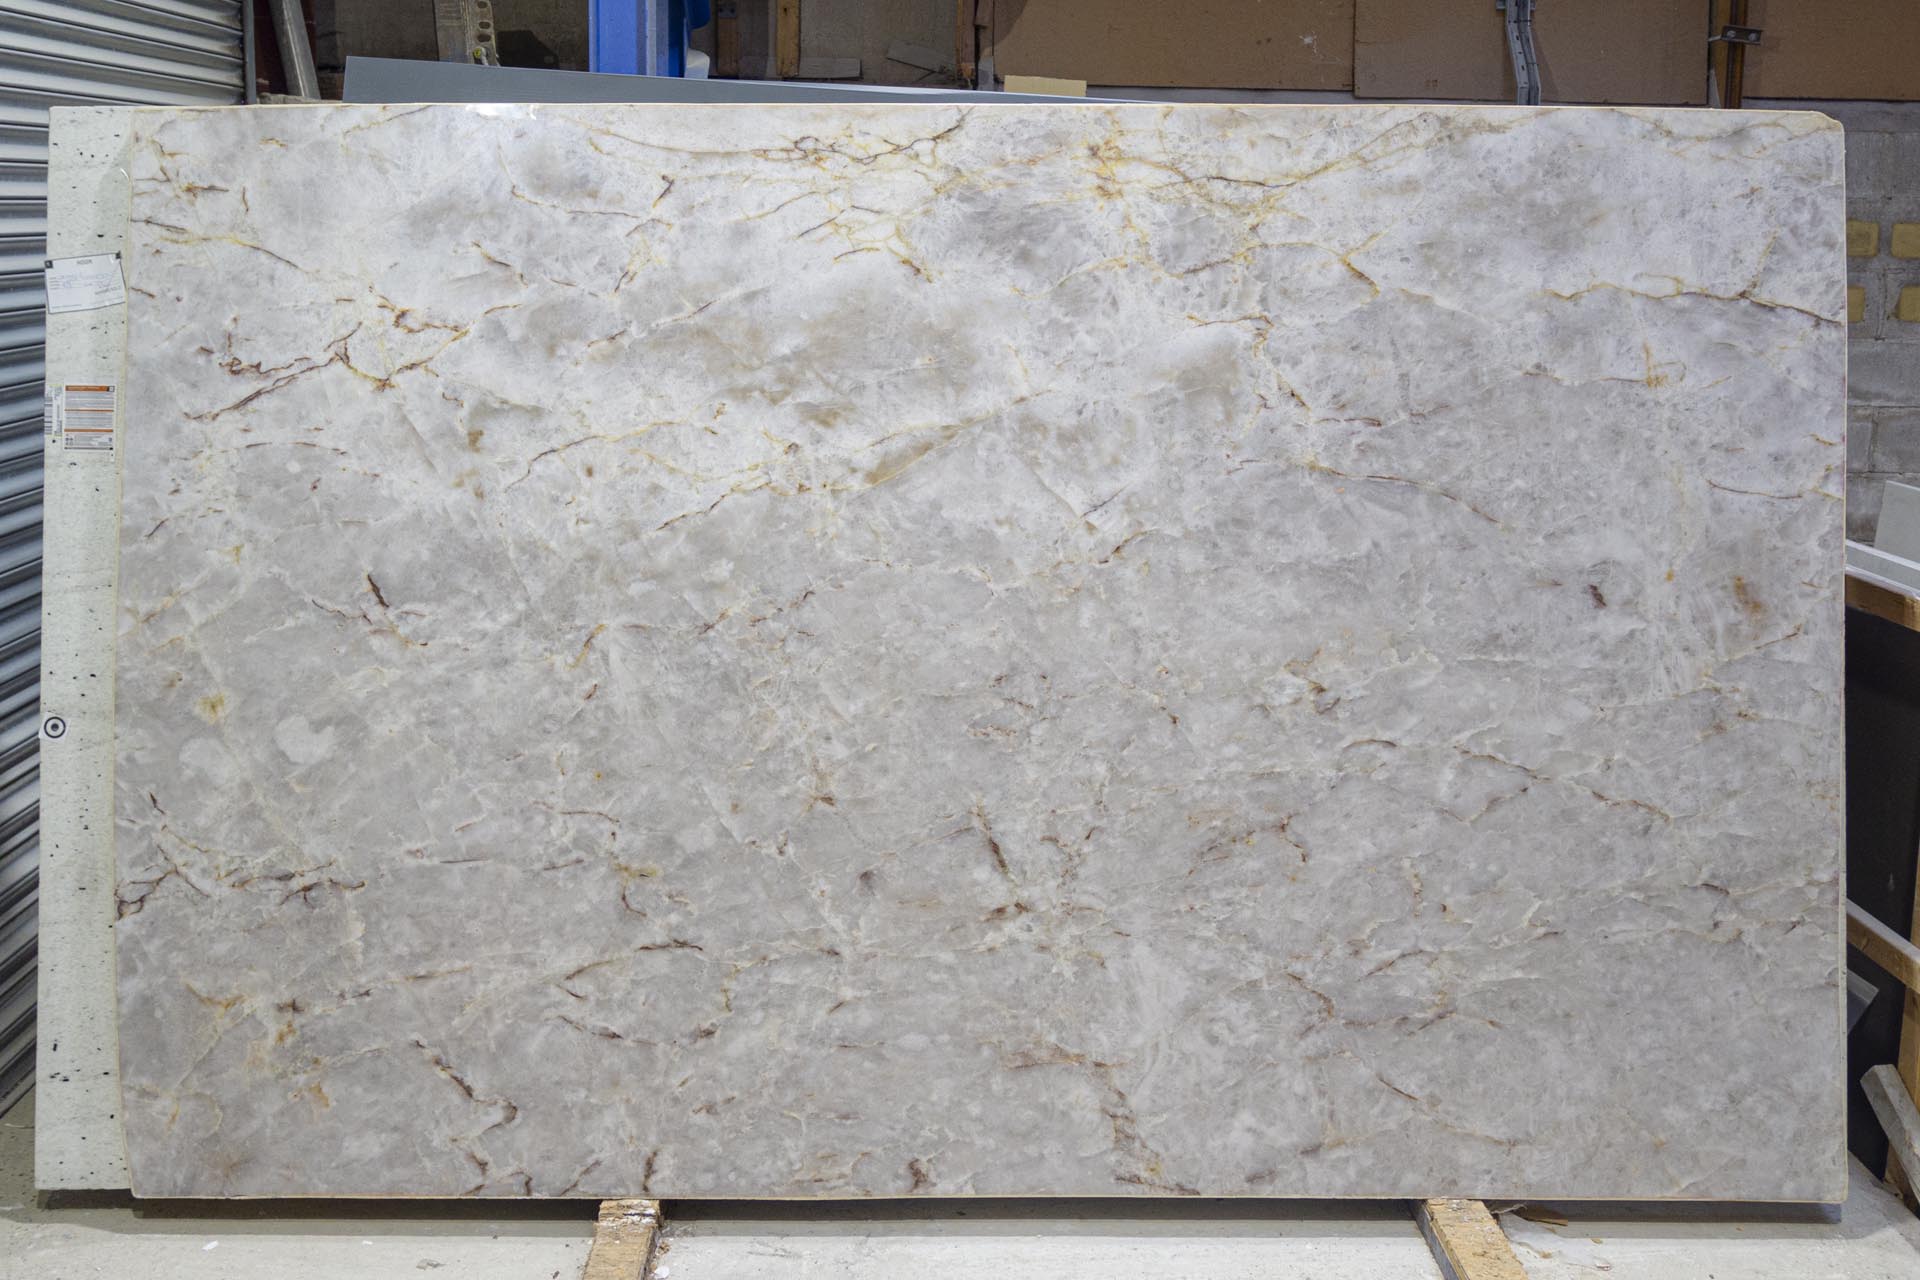 Cristallo Granite worktops natural stone in your kitchen MS211122 41639 125937 (1) a